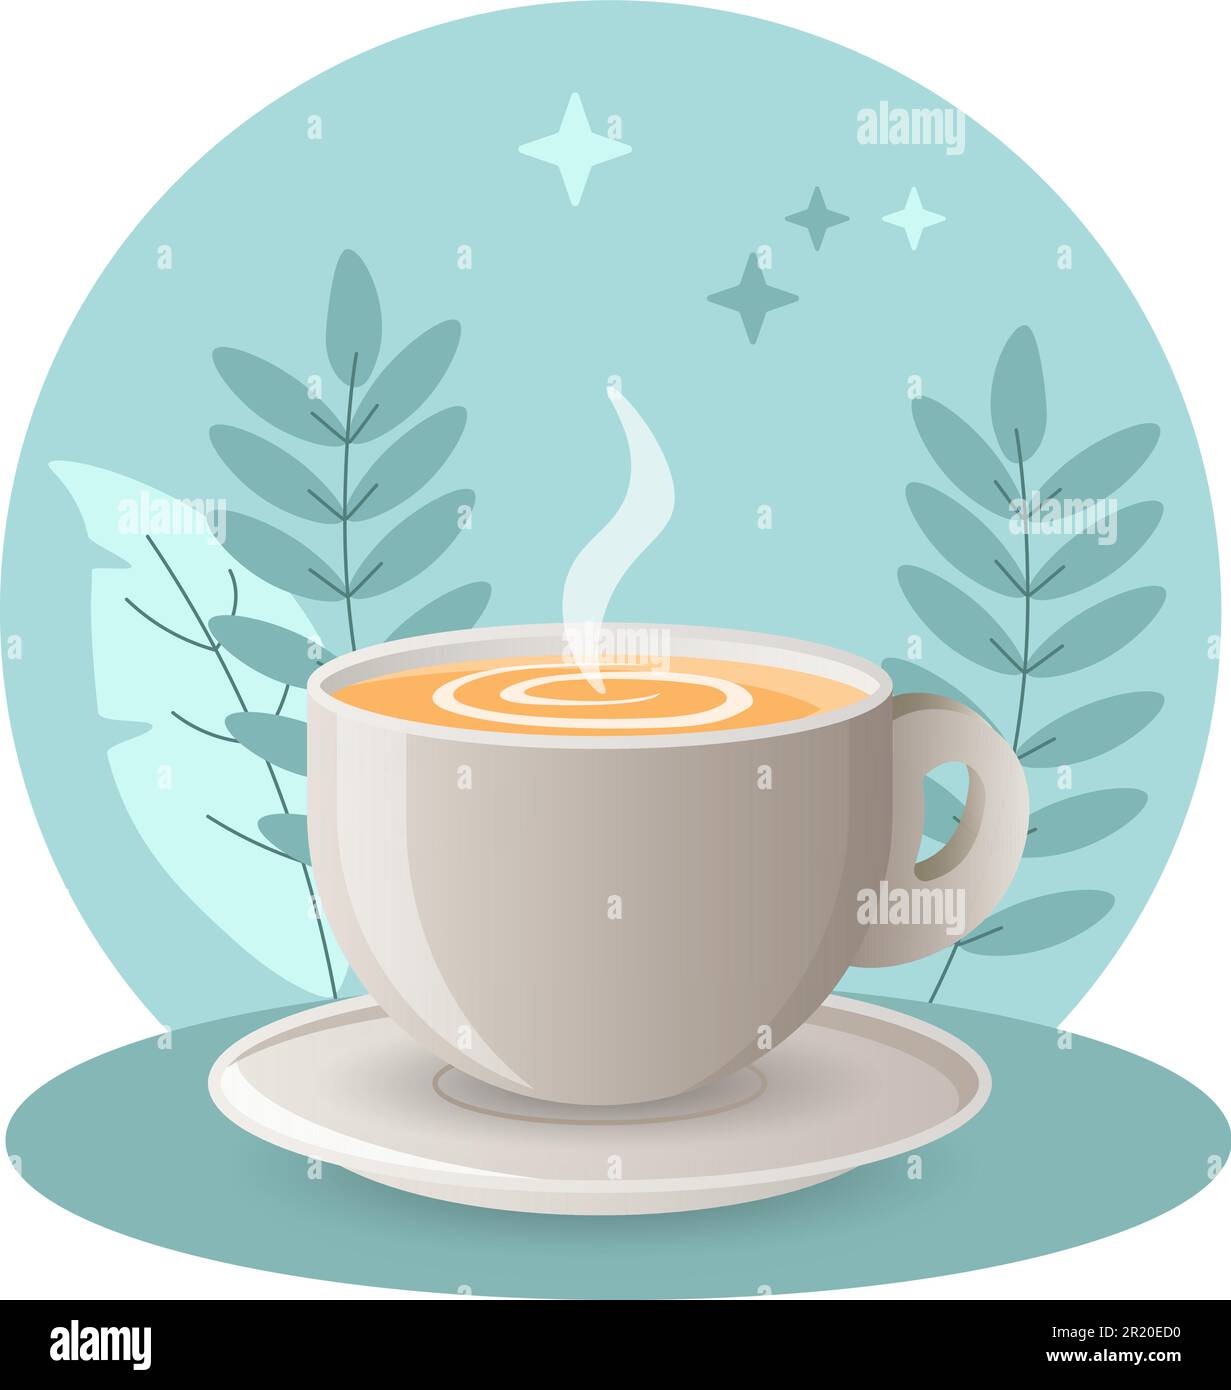 https://c8.alamy.com/comp/2R20ED0/cappuccino-illustration-cup-saucer-coffee-steam-editable-vector-graphic-design-2R20ED0.jpg